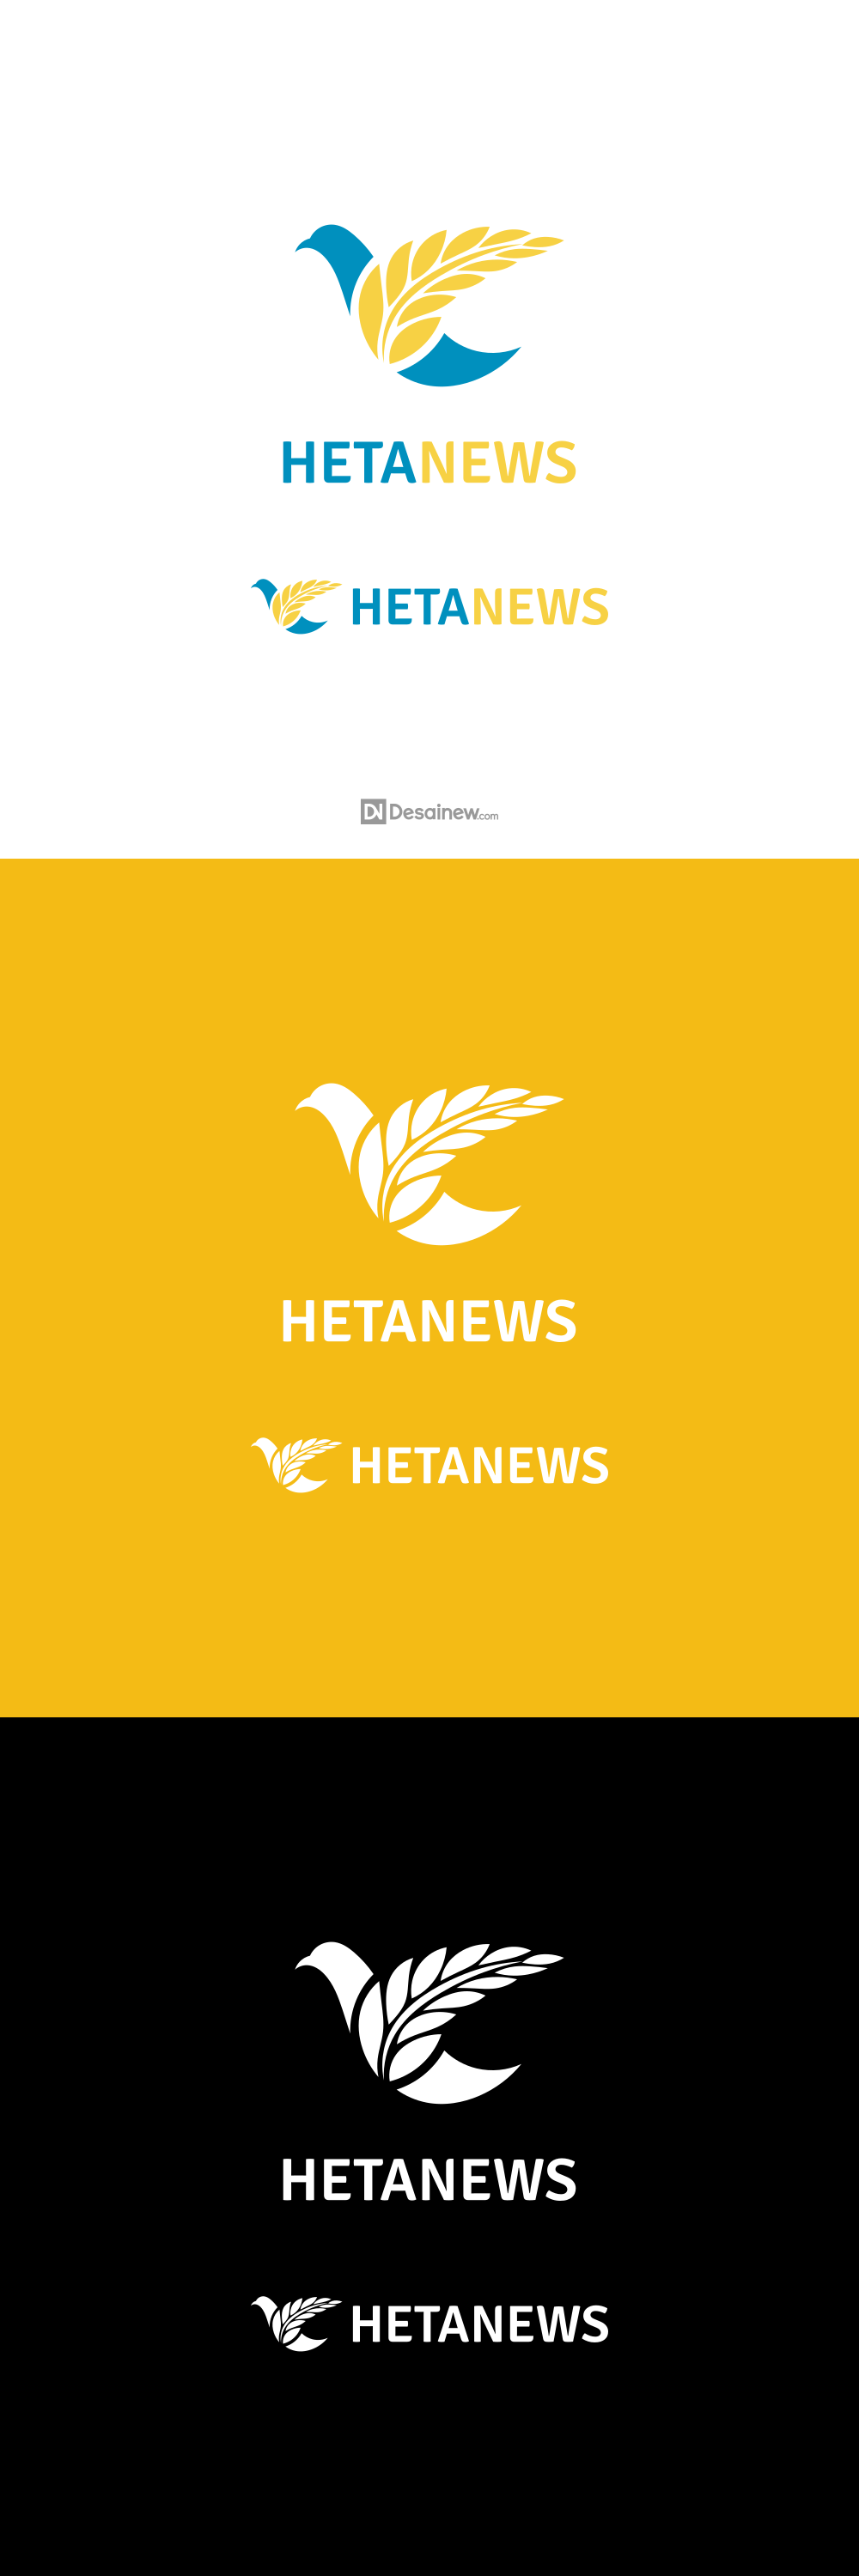 HetaNews Logo Design project portfolio Desainew Studio